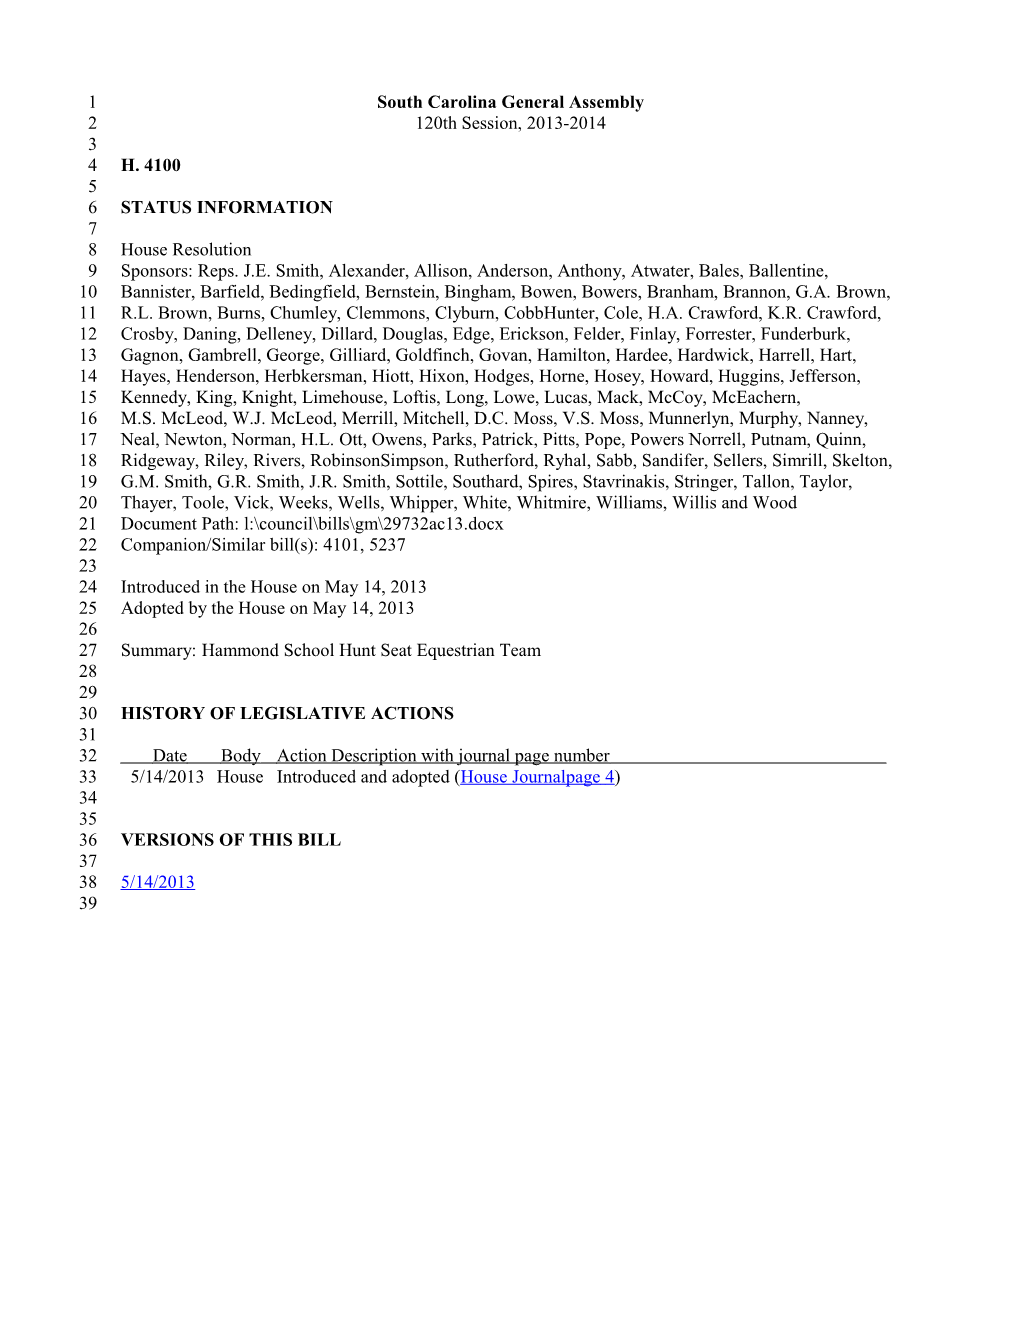 2013-2014 Bill 4100: Hammond School Hunt Seat Equestrian Team - South Carolina Legislature